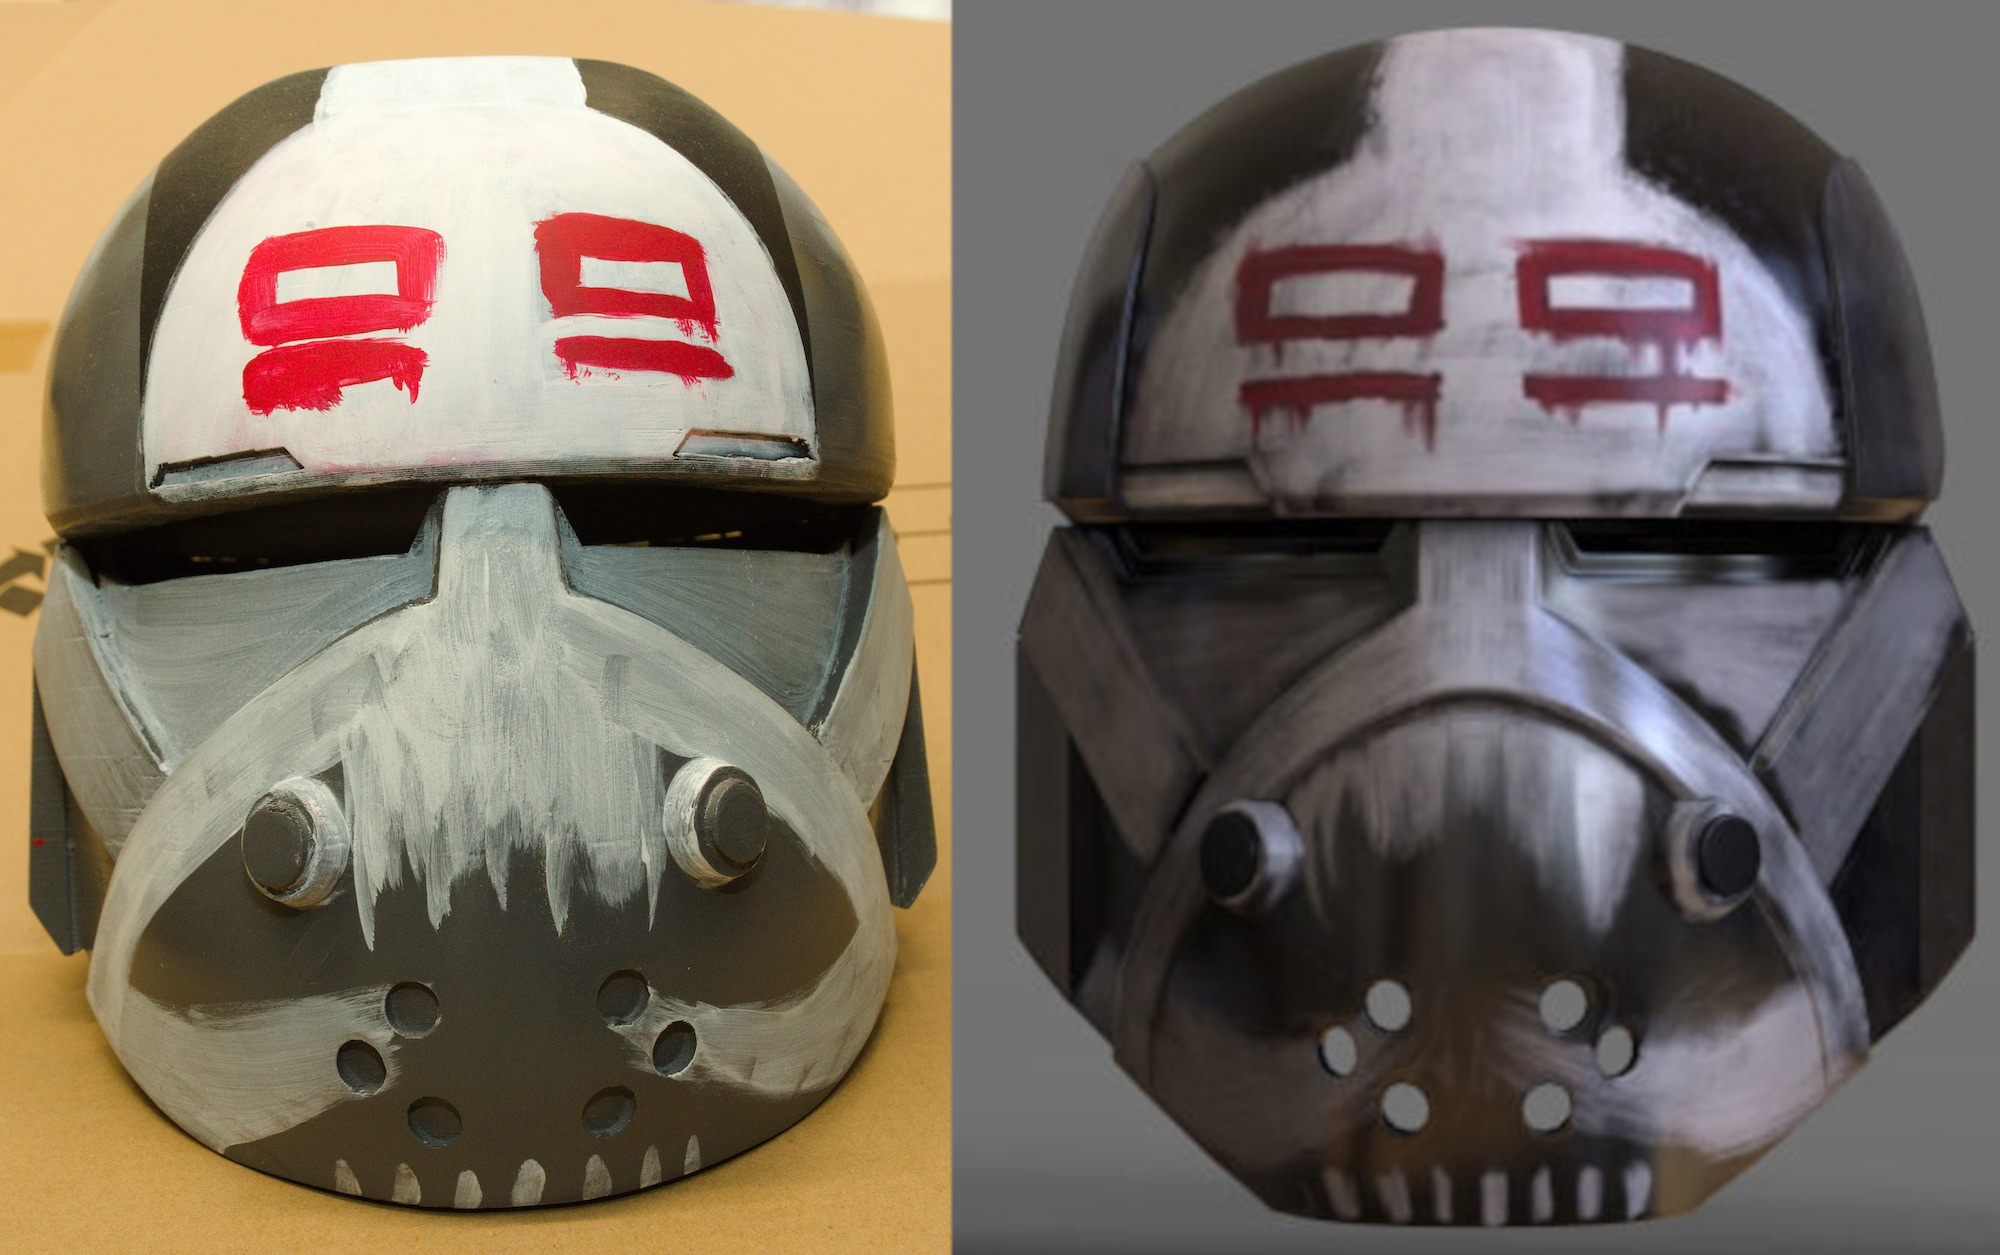 Helmet reference comparison